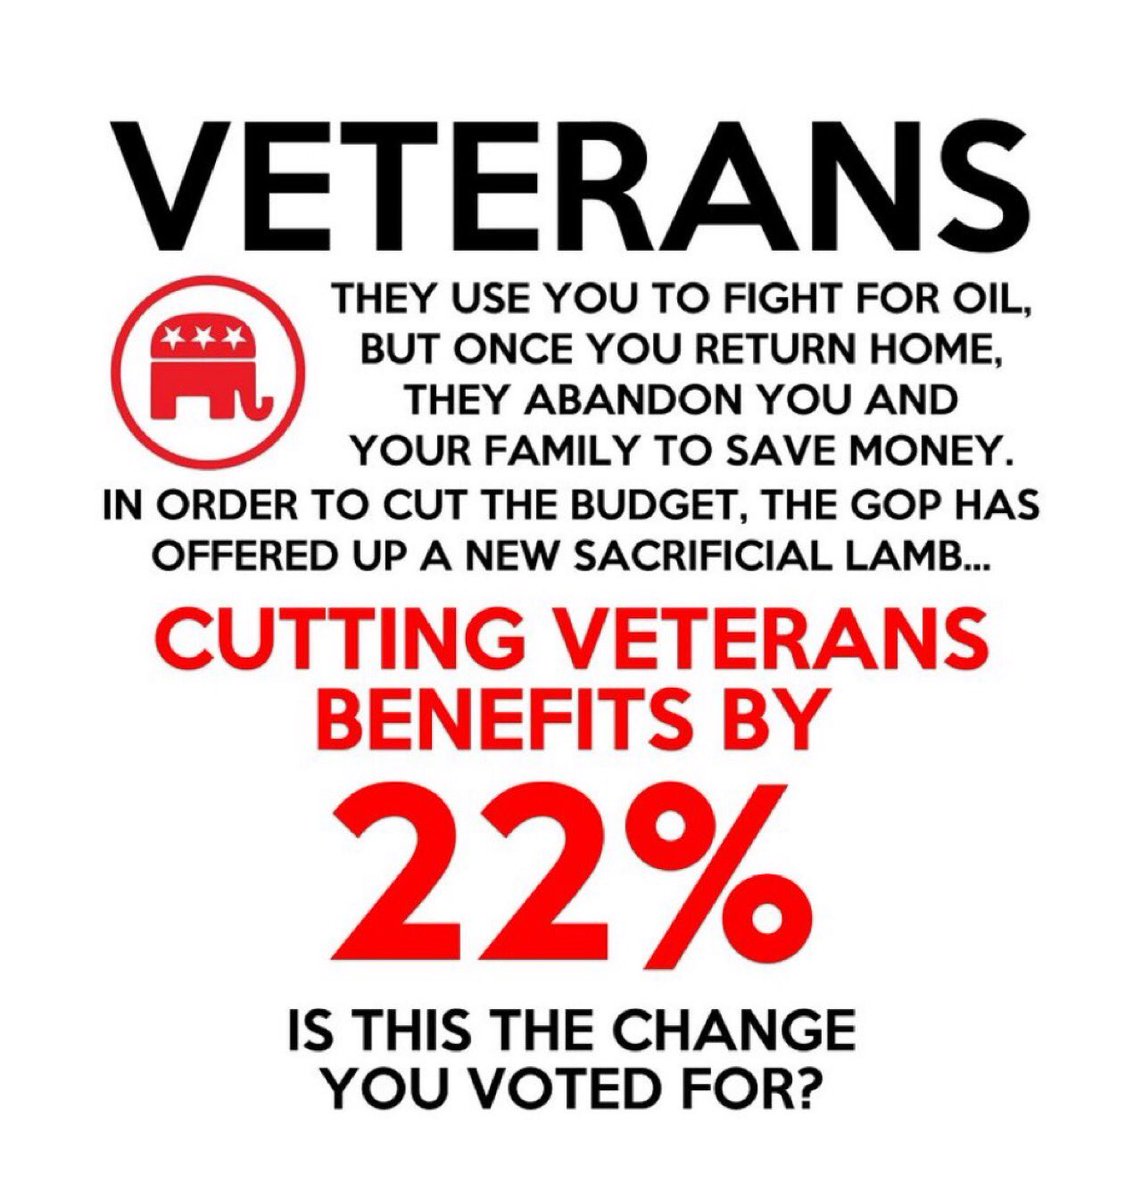 @RepBuddyCarter @SpeakerMcCarthy @HouseGOP @POTUS Veterans do not agree the GQP BILL is a good one. #RepublicansDefaultOnVets